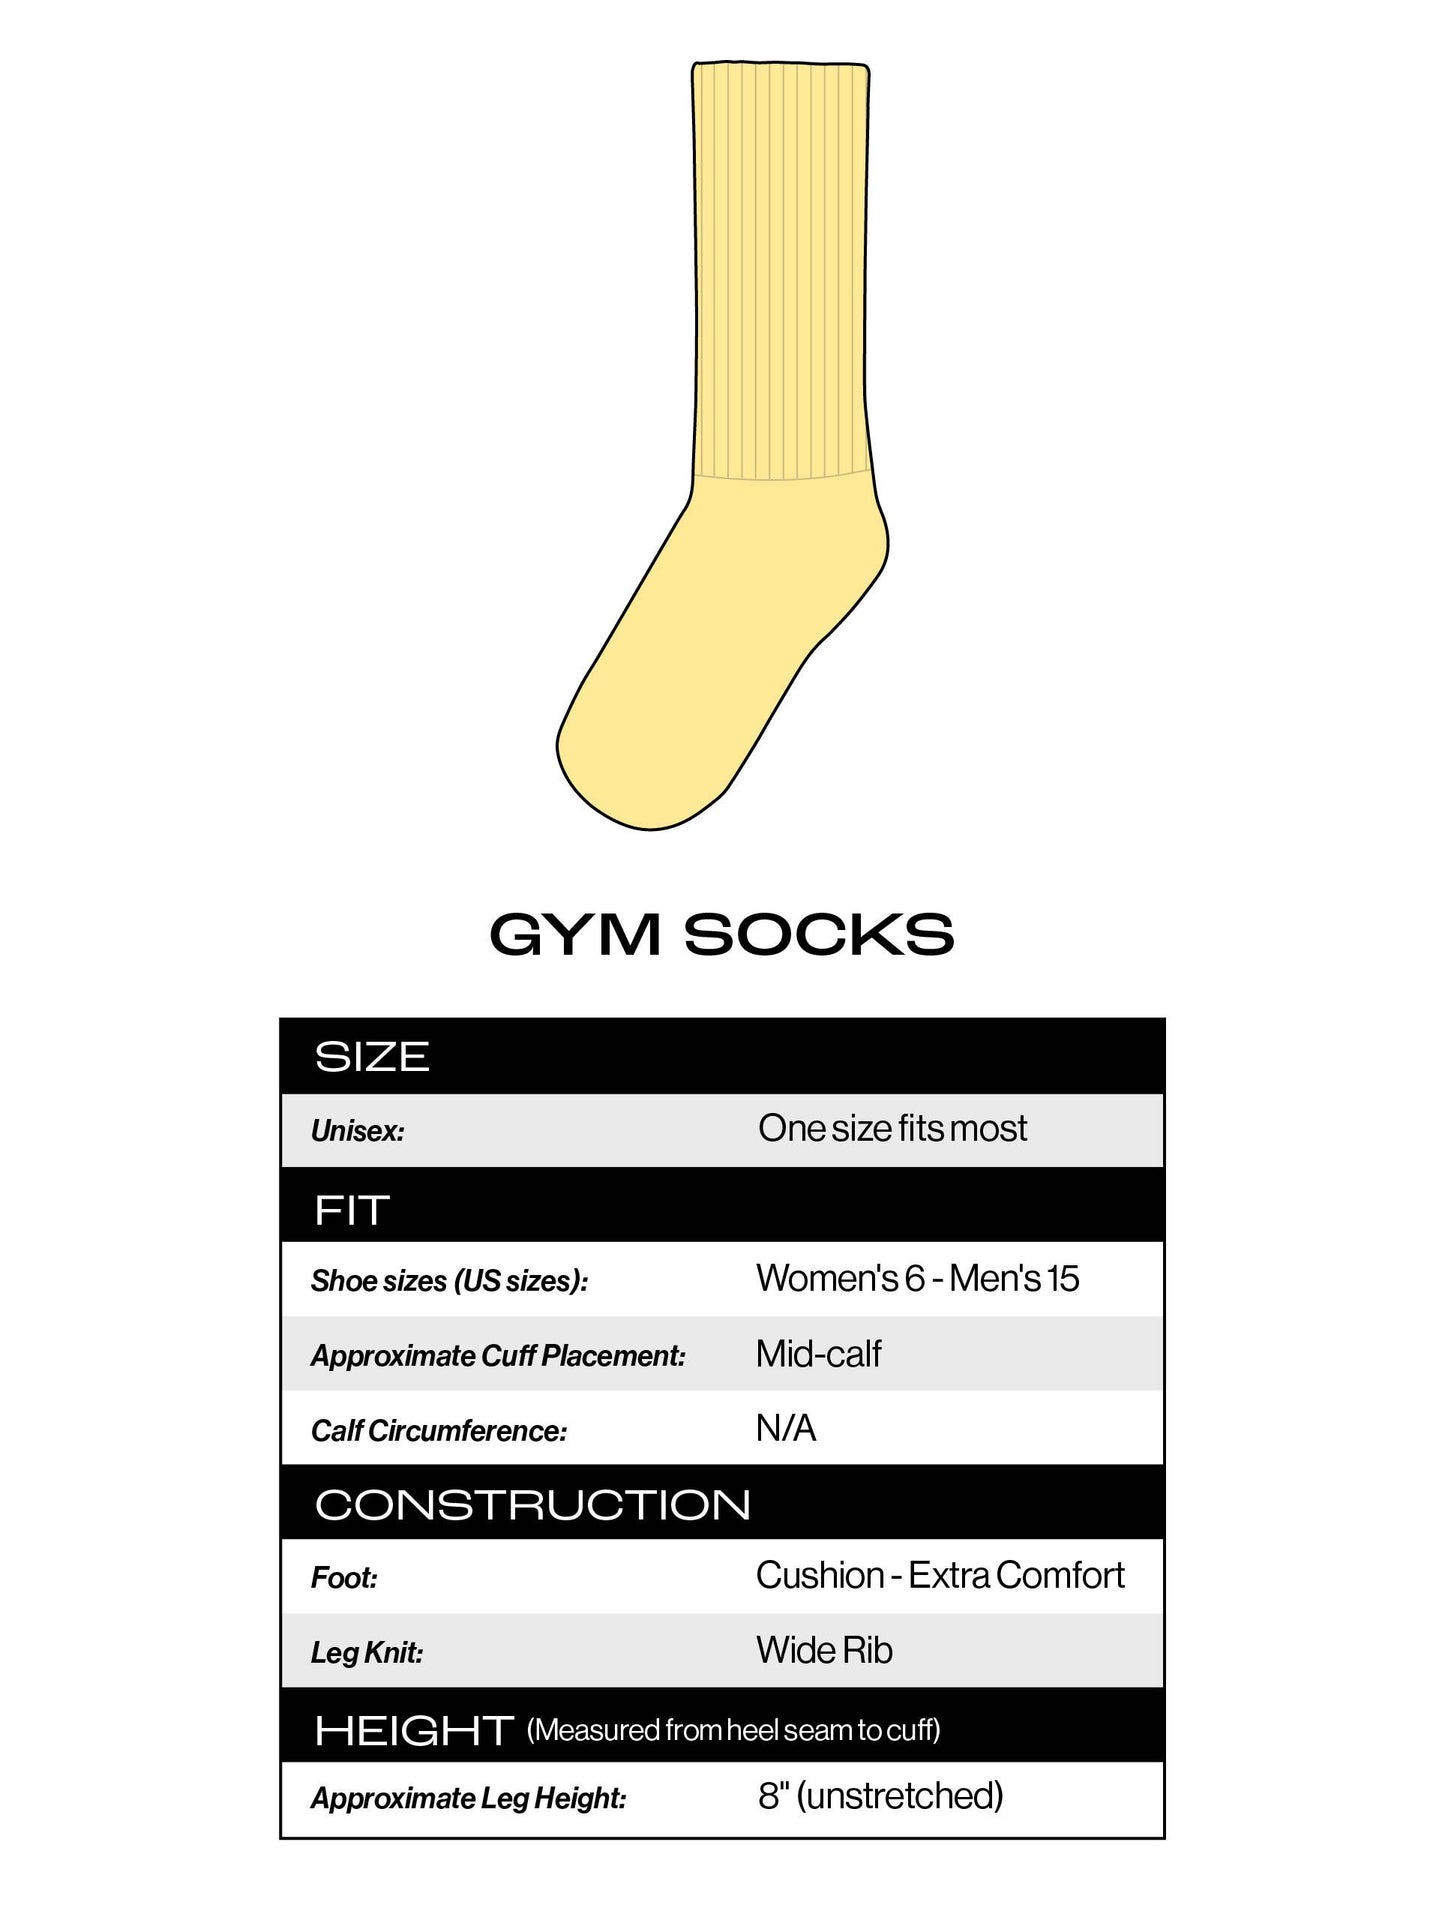 I'd Fuck Me - Black Gym Crew Socks